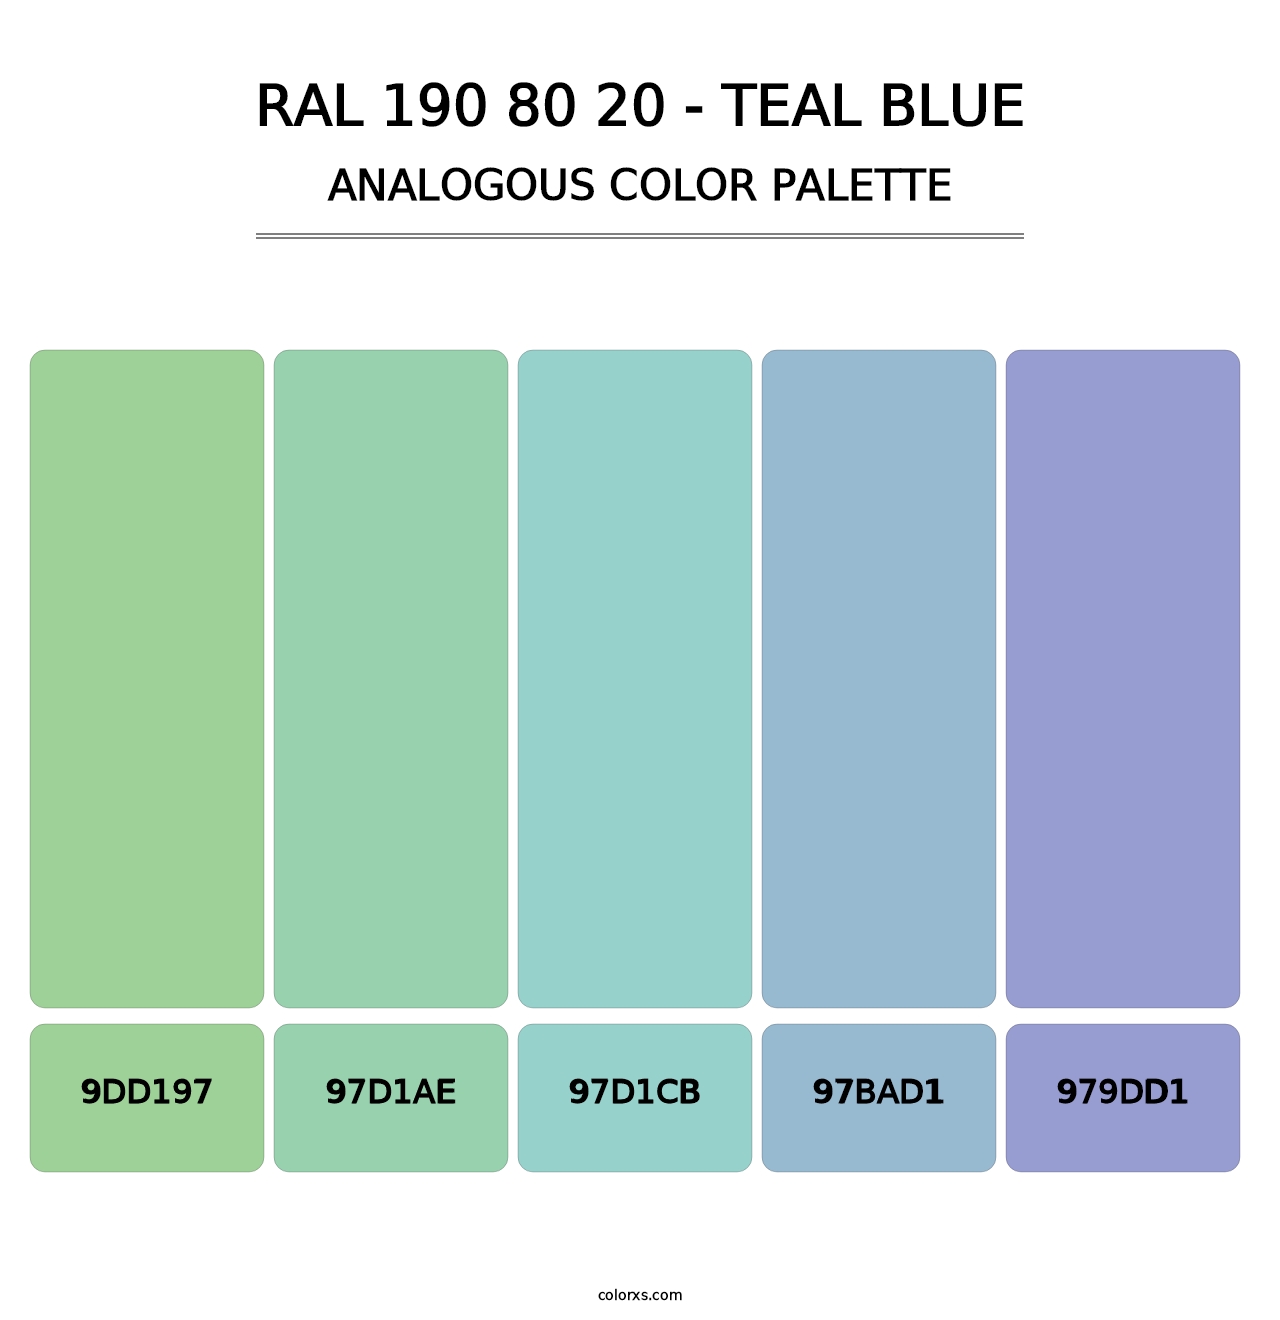 RAL 190 80 20 - Teal Blue - Analogous Color Palette